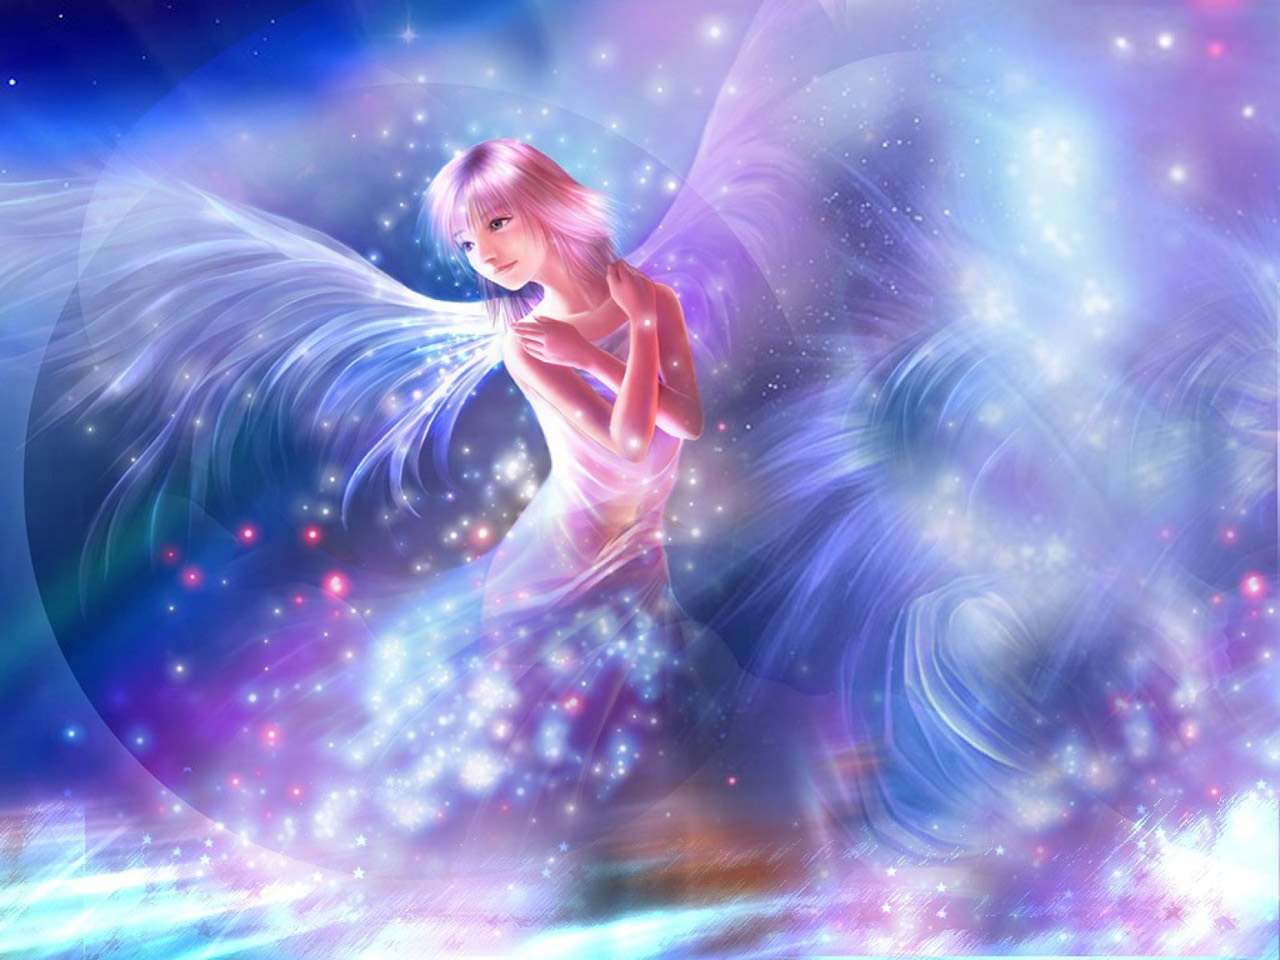 Shining Angel Fantasy Puter Desktop Wallpaper Pictures